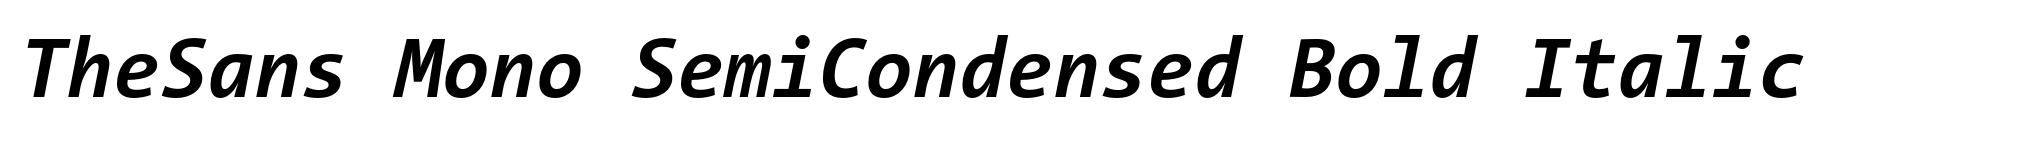 TheSans Mono SemiCondensed Bold Italic image